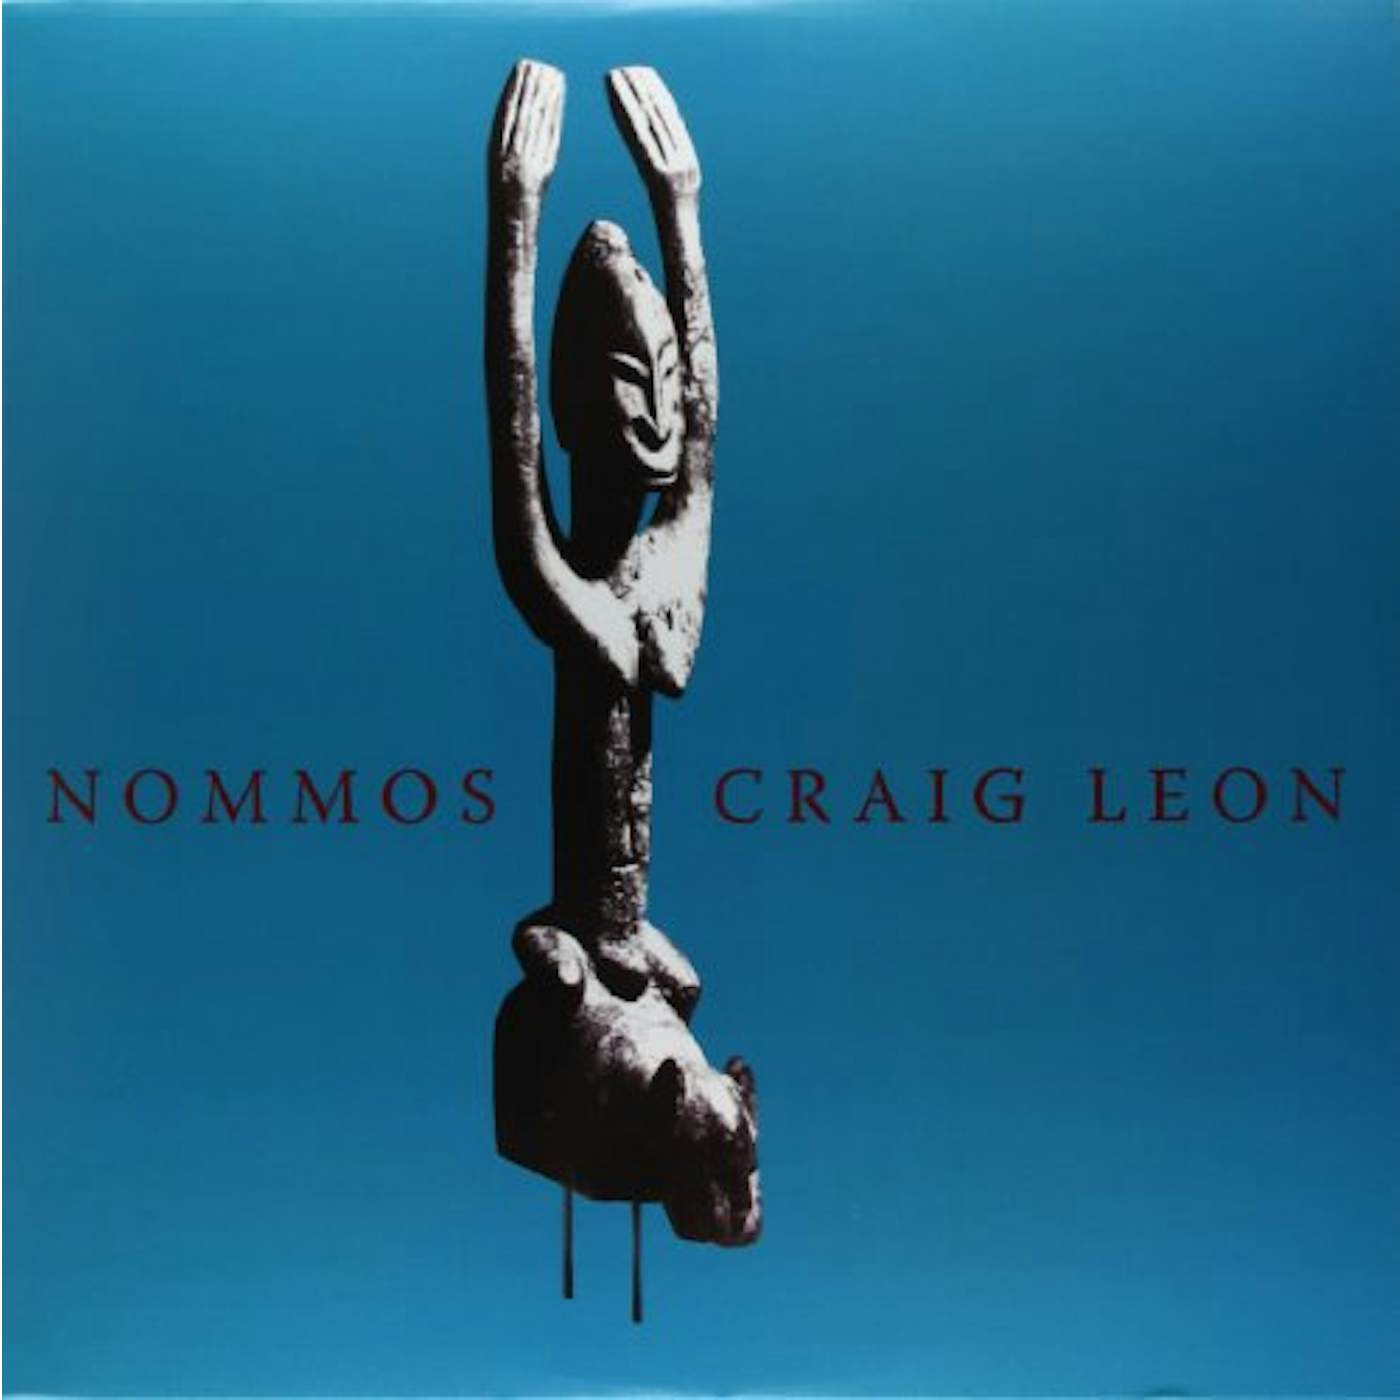 Craig Leon Nommos Vinyl Record